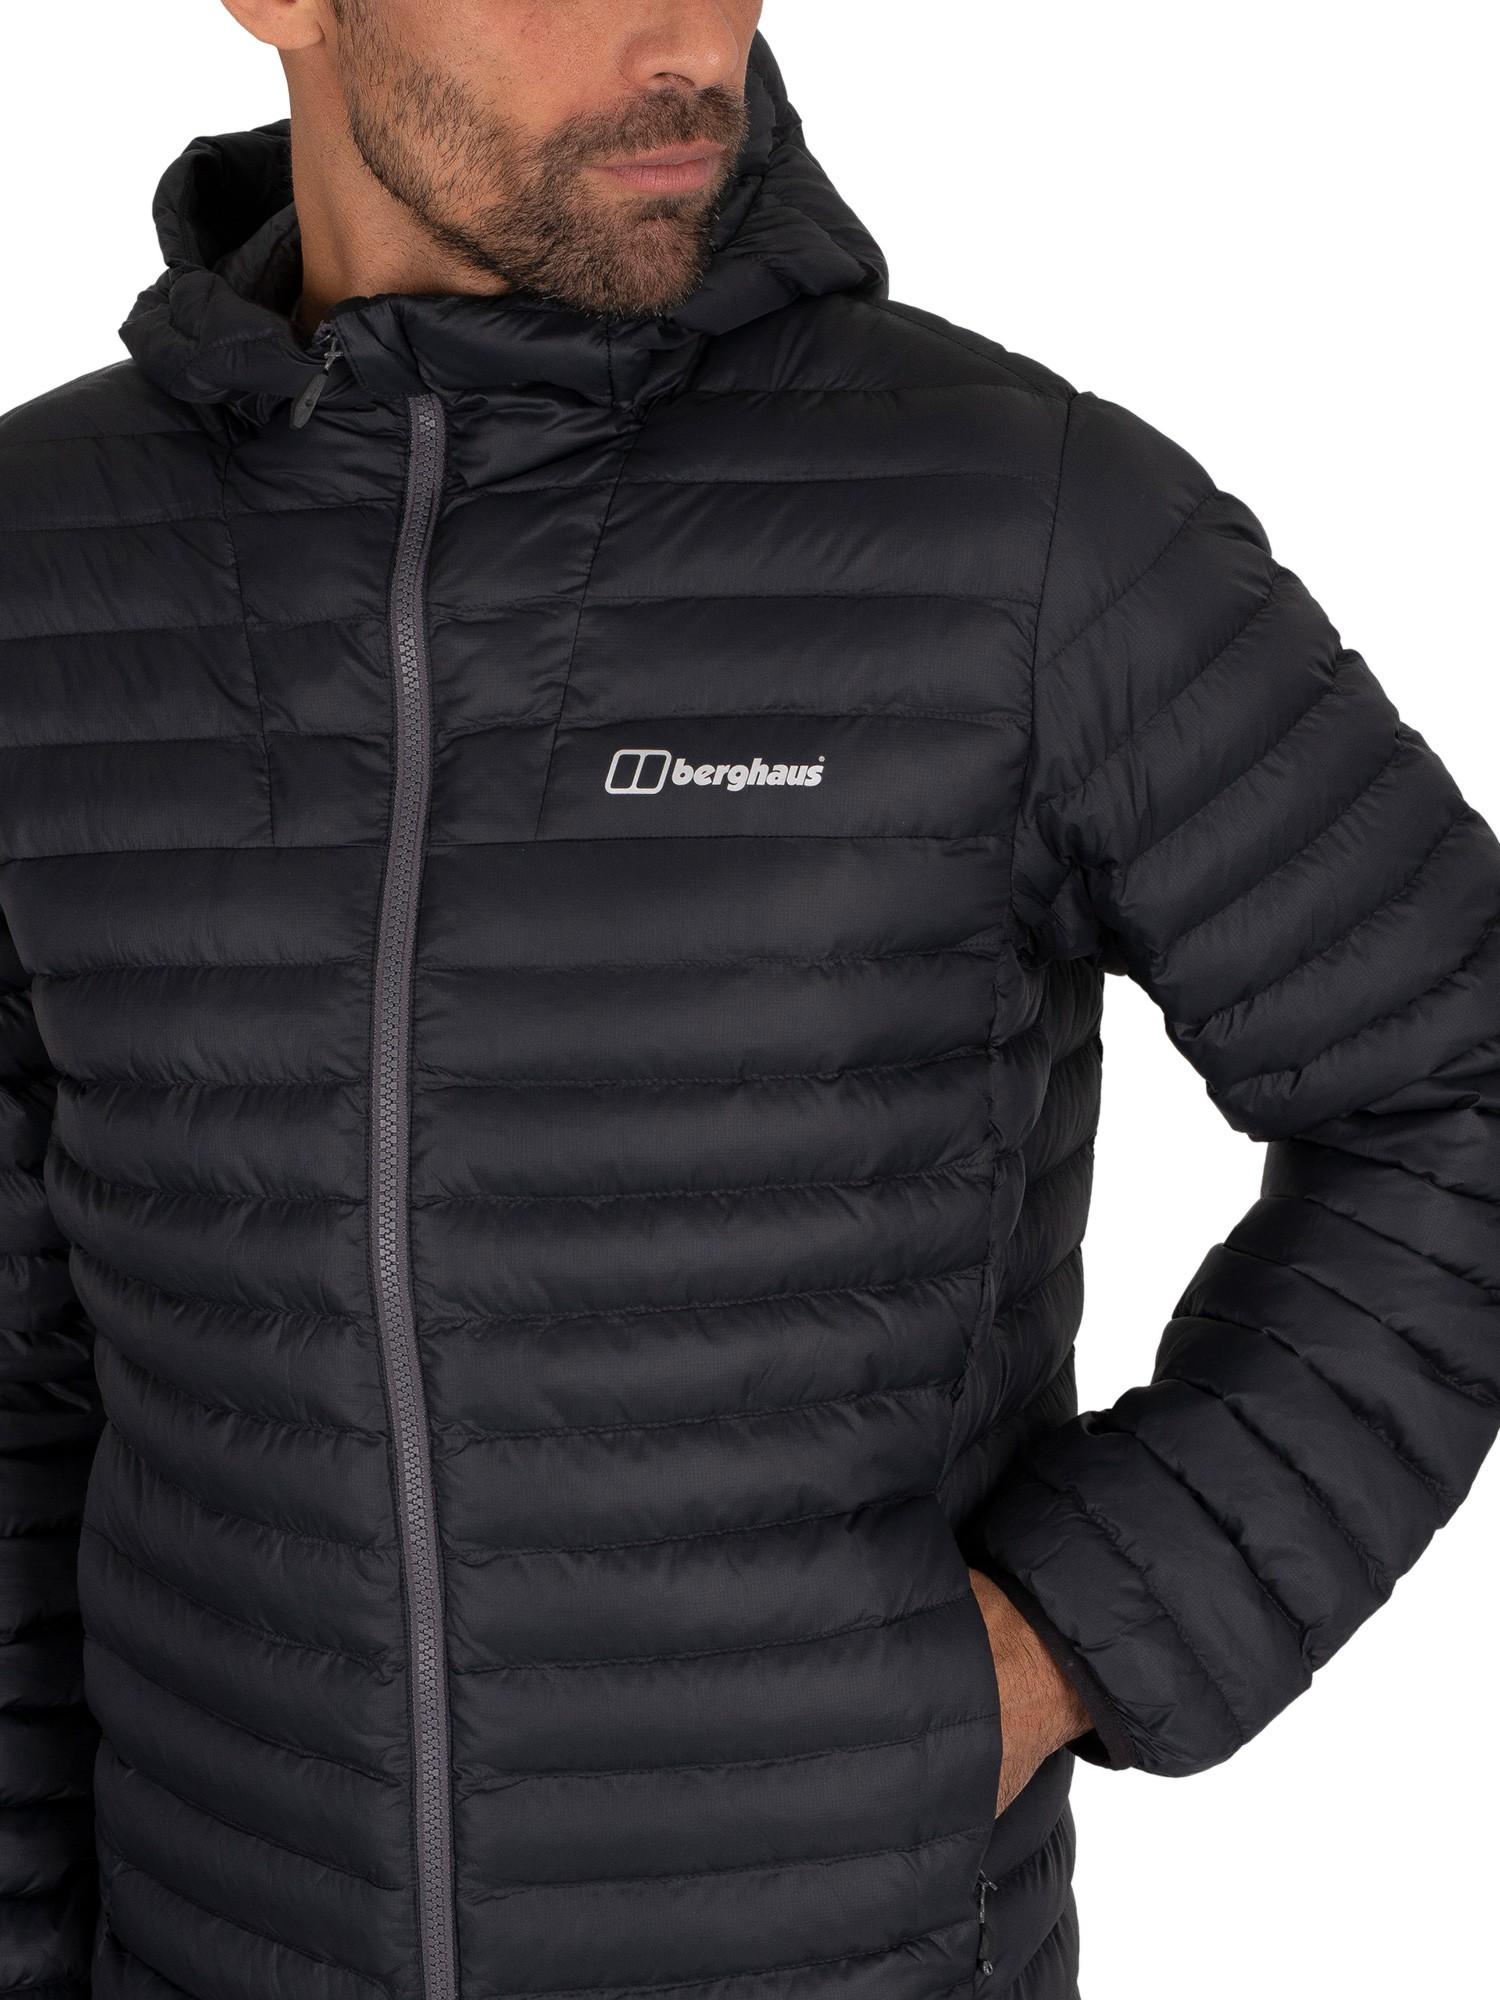 Black Berghaus Puffer Jacket | vlr.eng.br